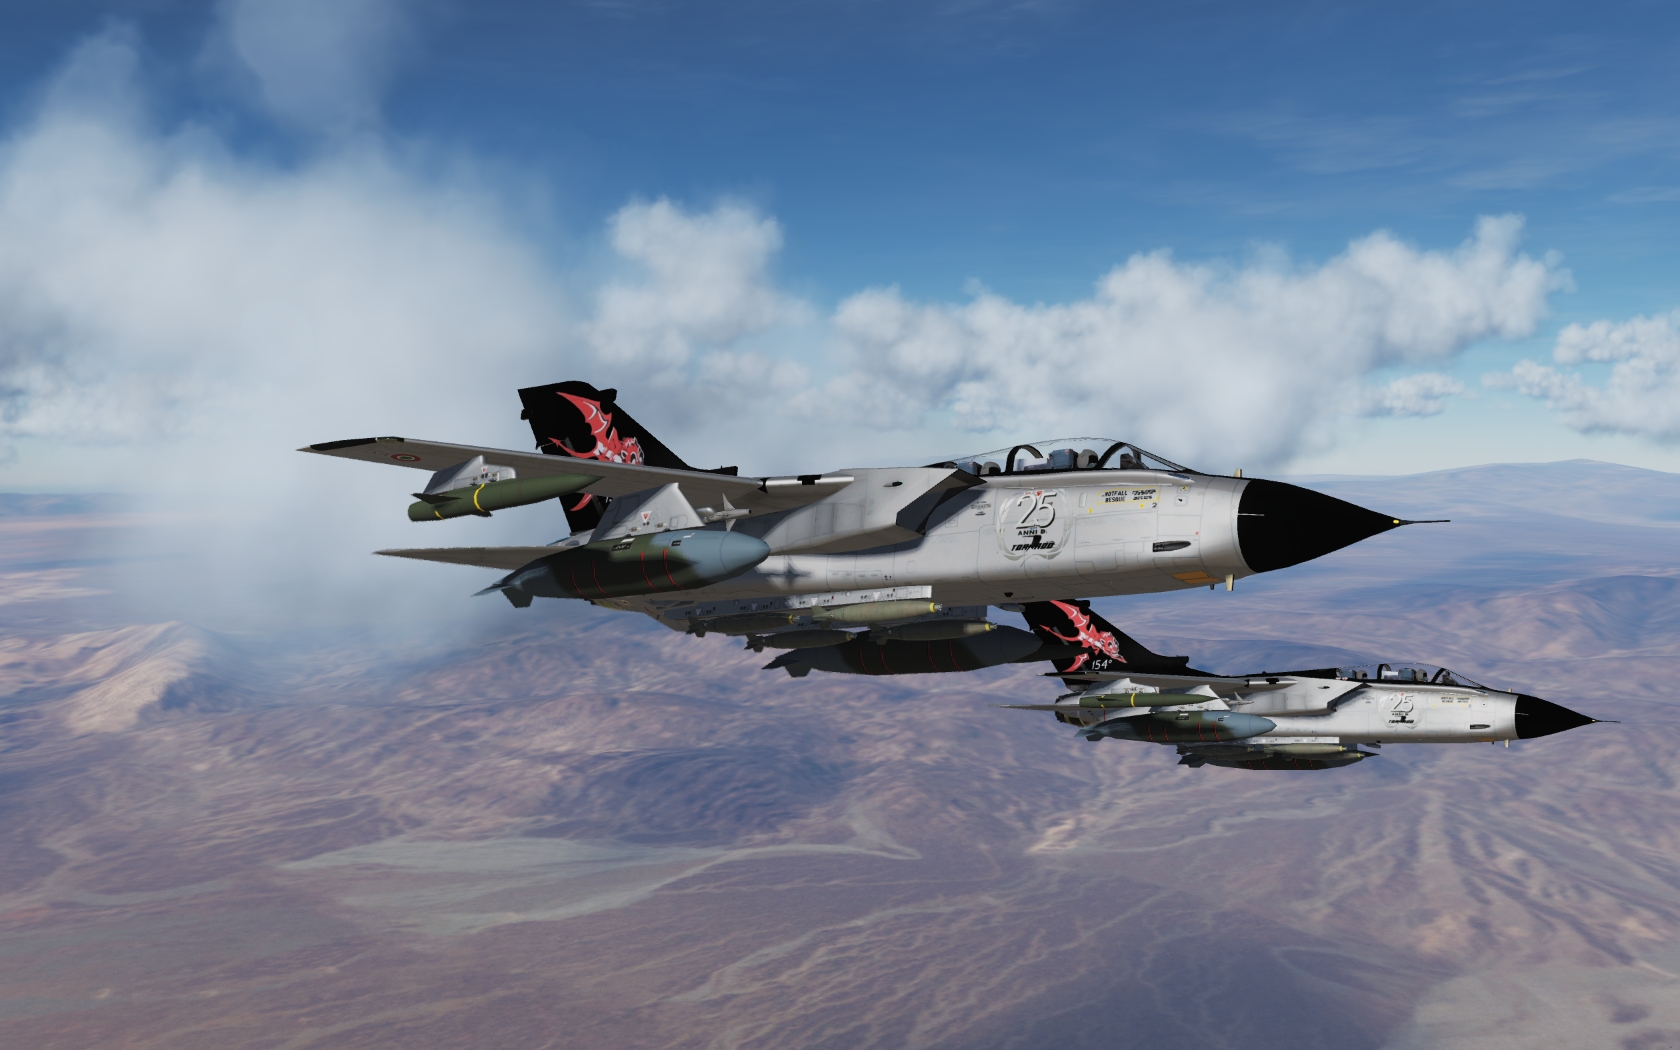 DCS WORLD 米格21比斯 + 米格29 + Tornado + A-10  混战游戏截图-6212 